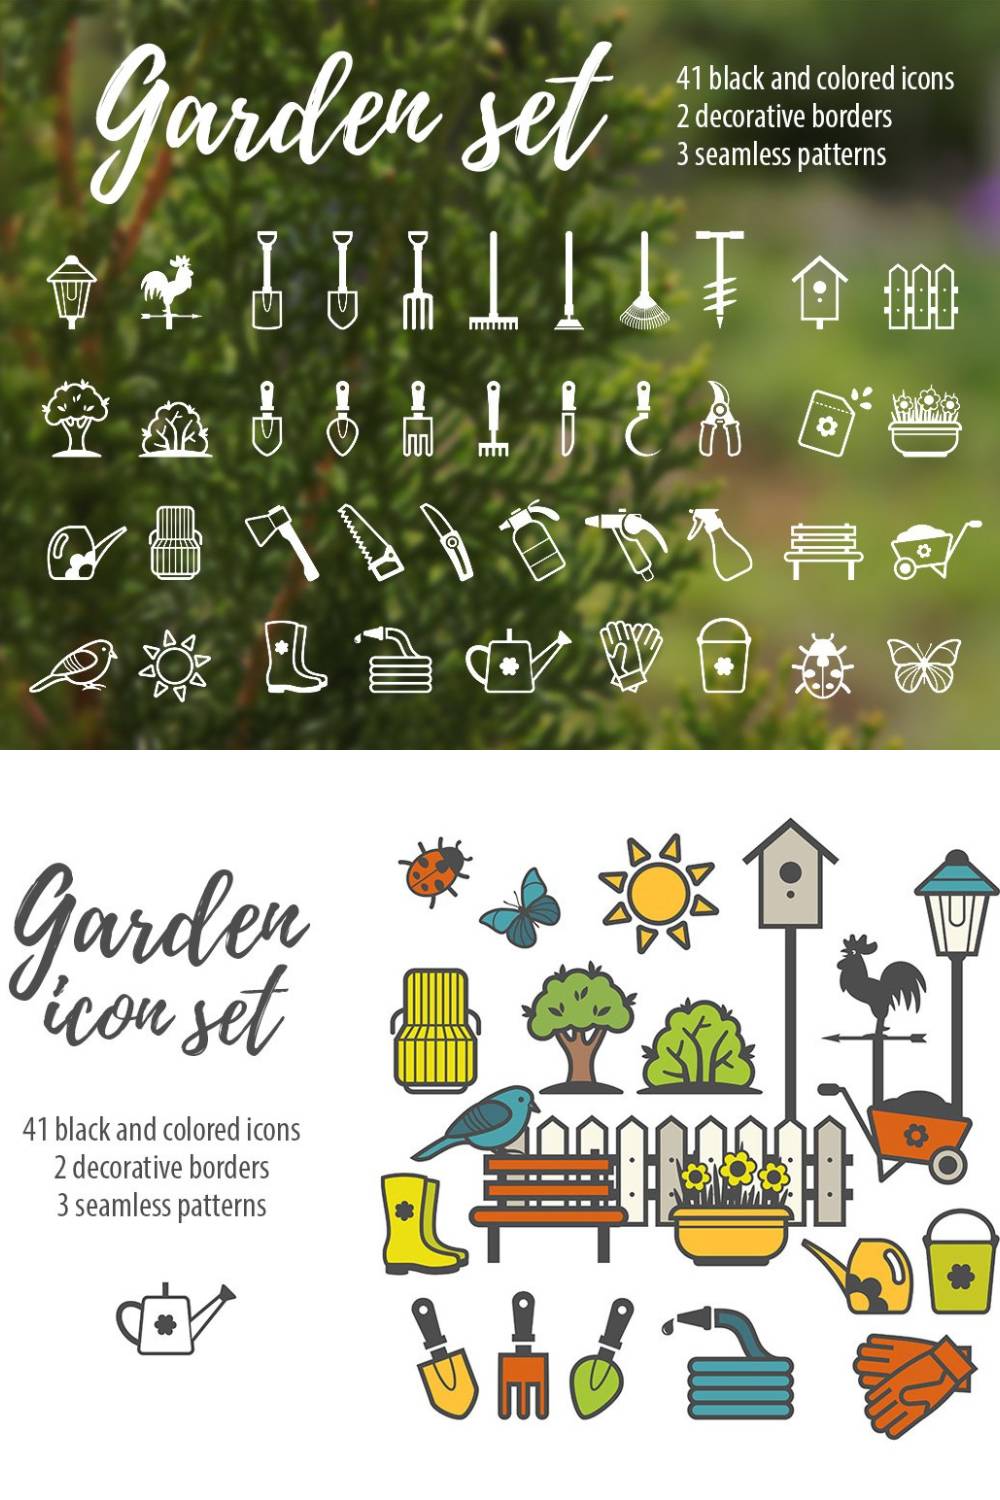 Vector Set Of Garden Tools Pinterest Cover.